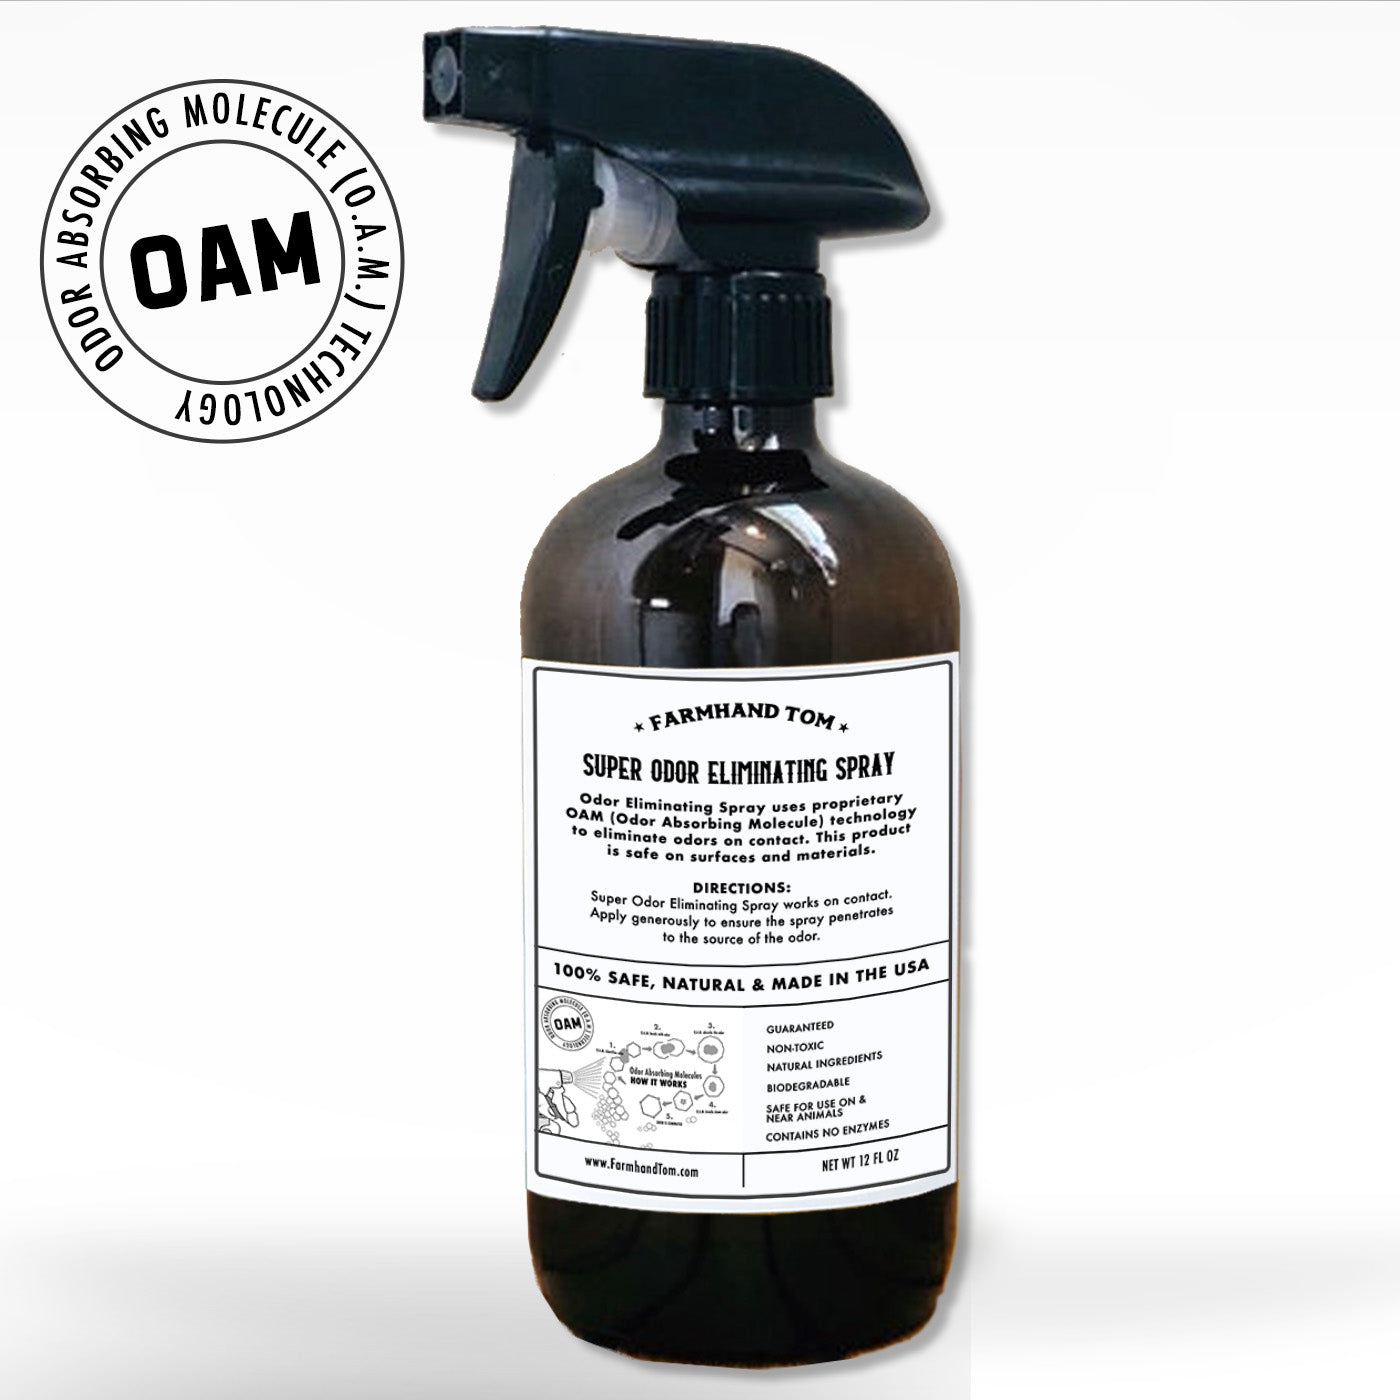 CAMPING | Super Odor Eliminating Spray